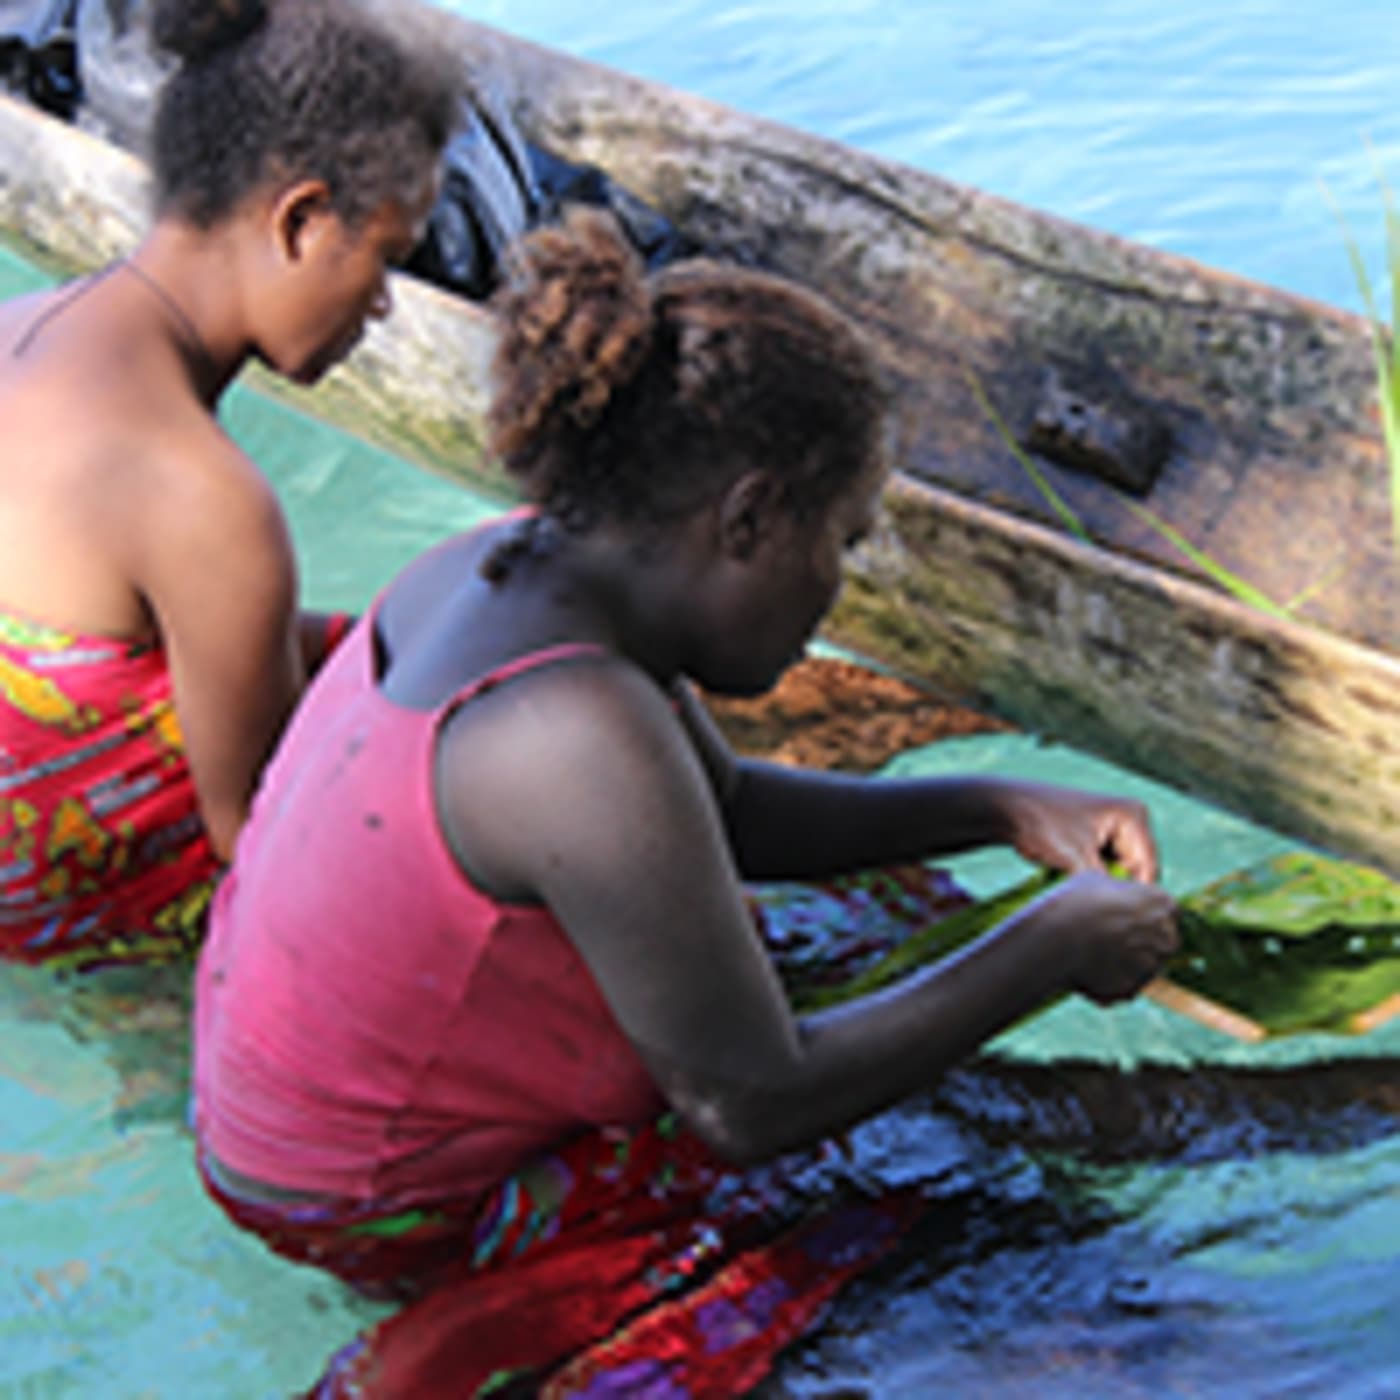 Collecting seaweed, Solomon Islands, IFADs trip, November 2013